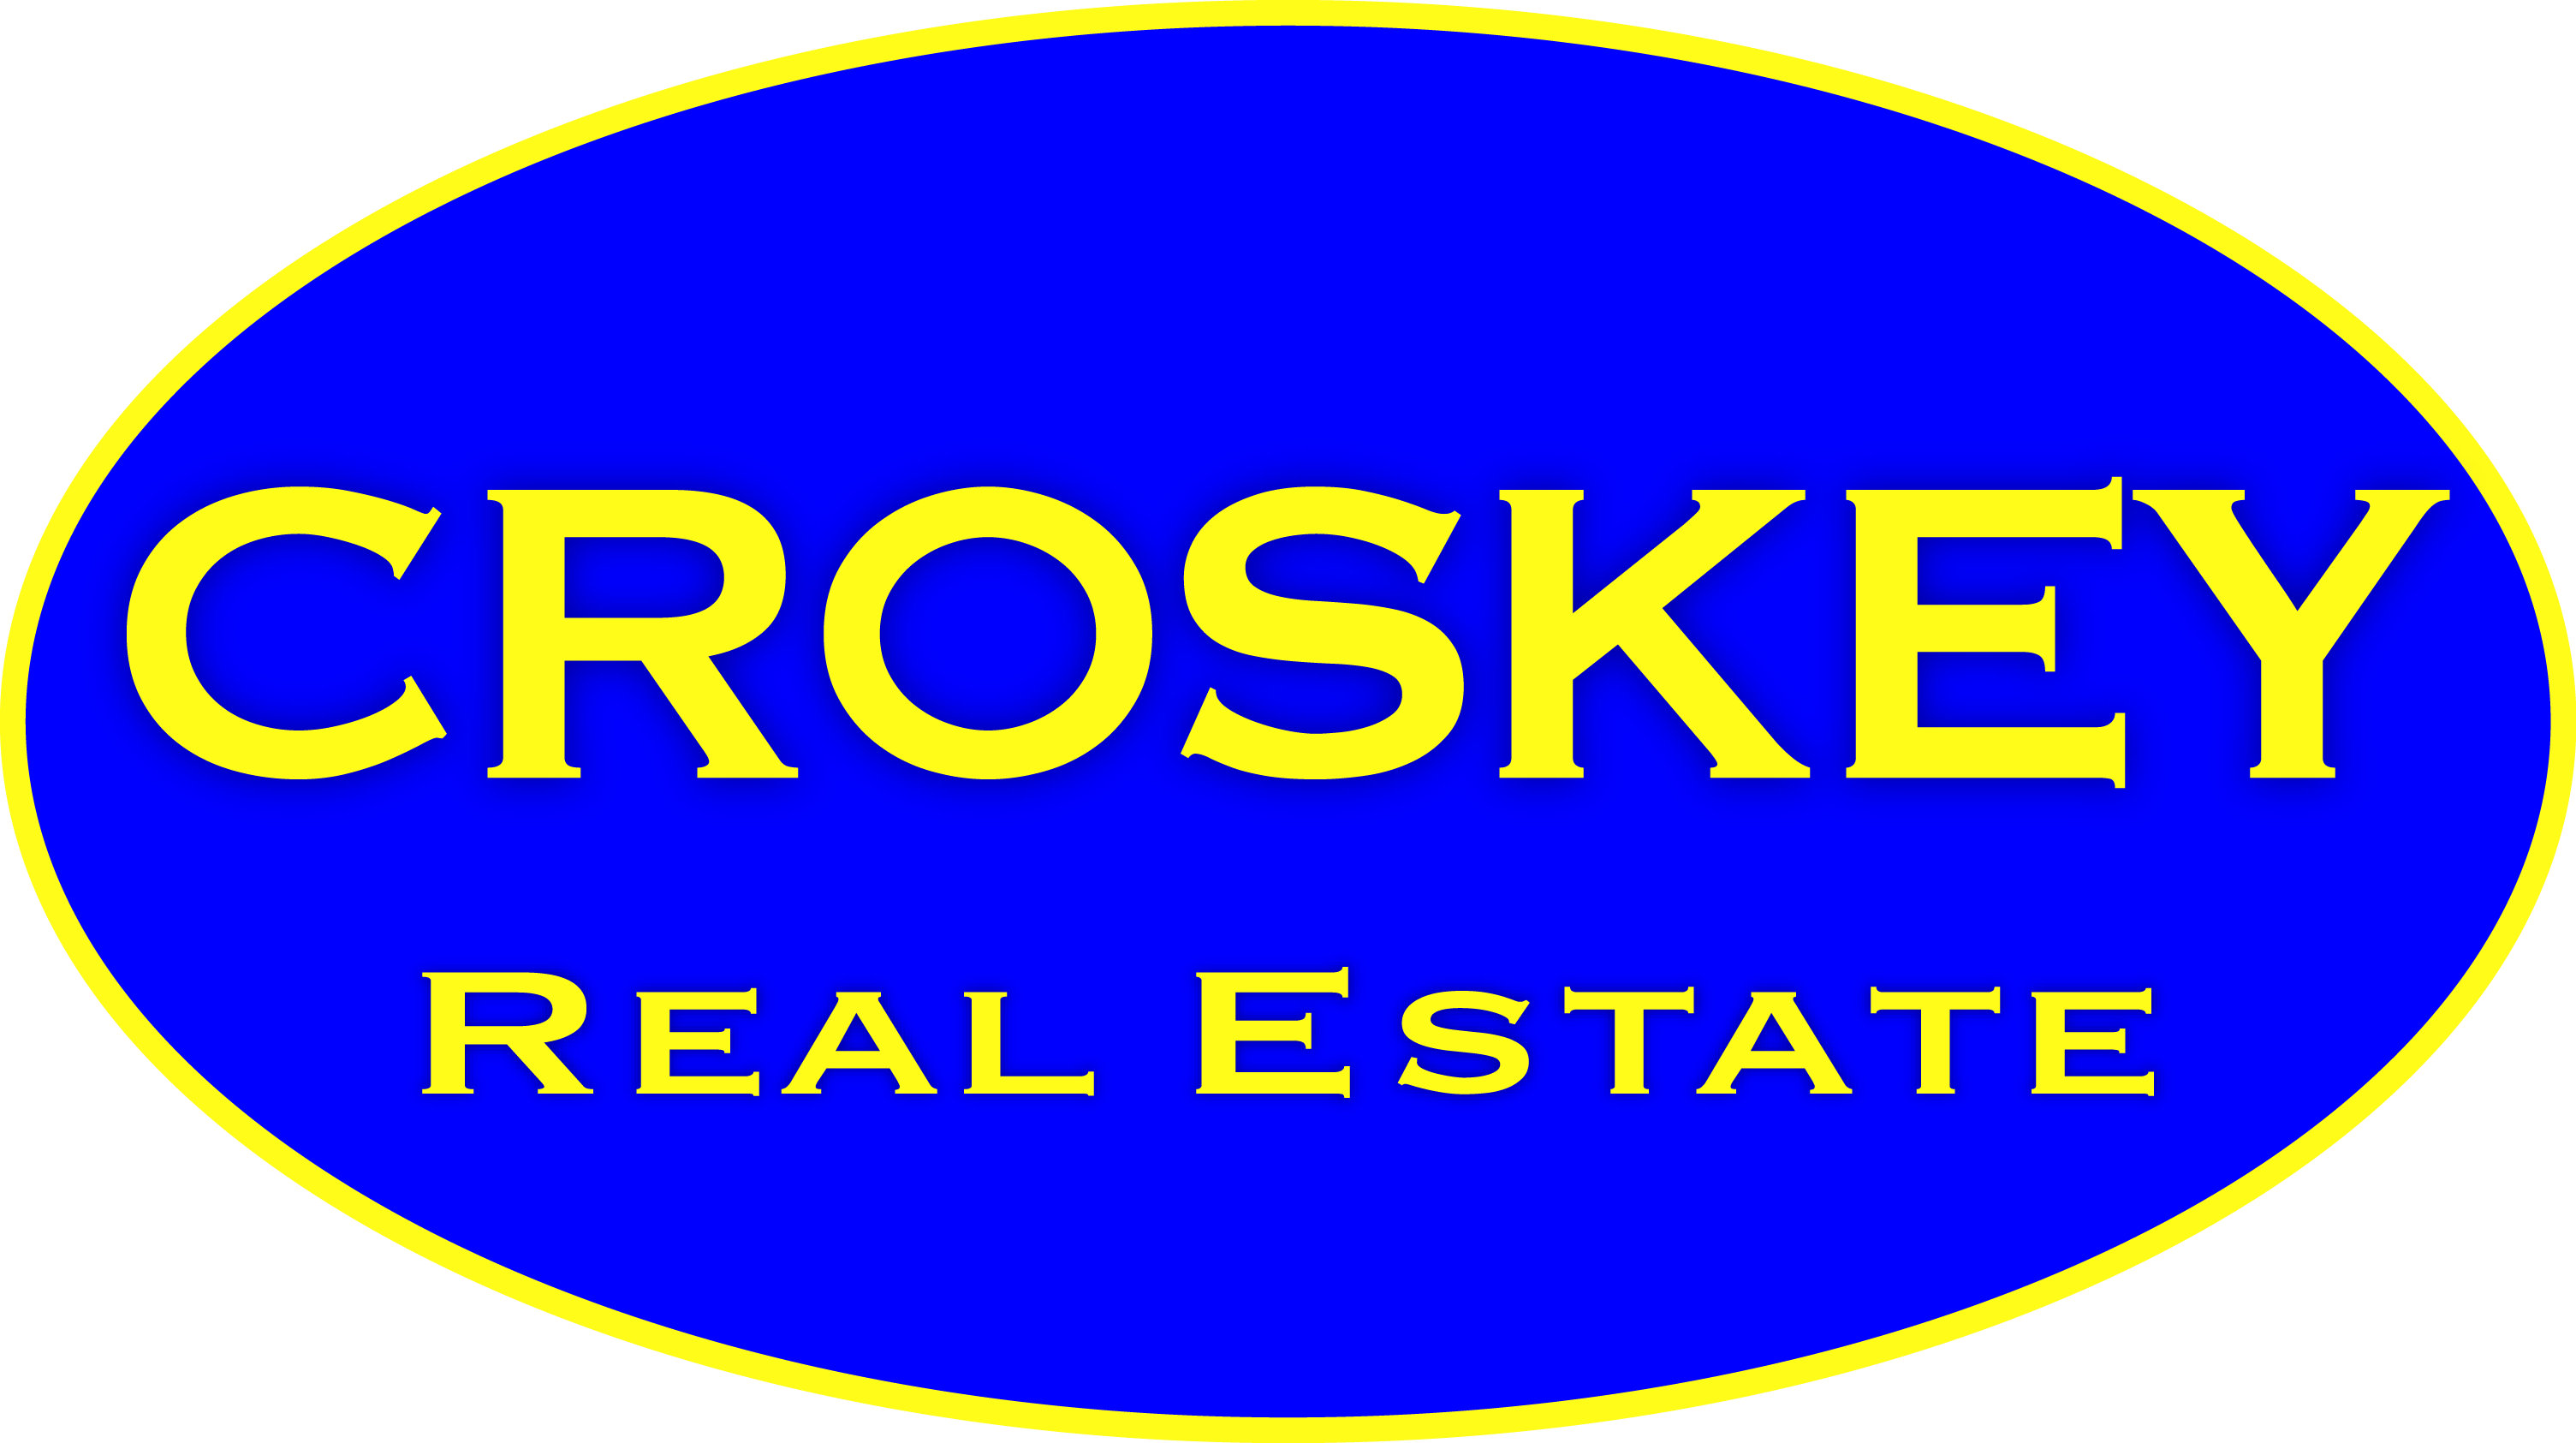 CroskeyLogo-Croskey Real Estate - Property Management in California Bay area